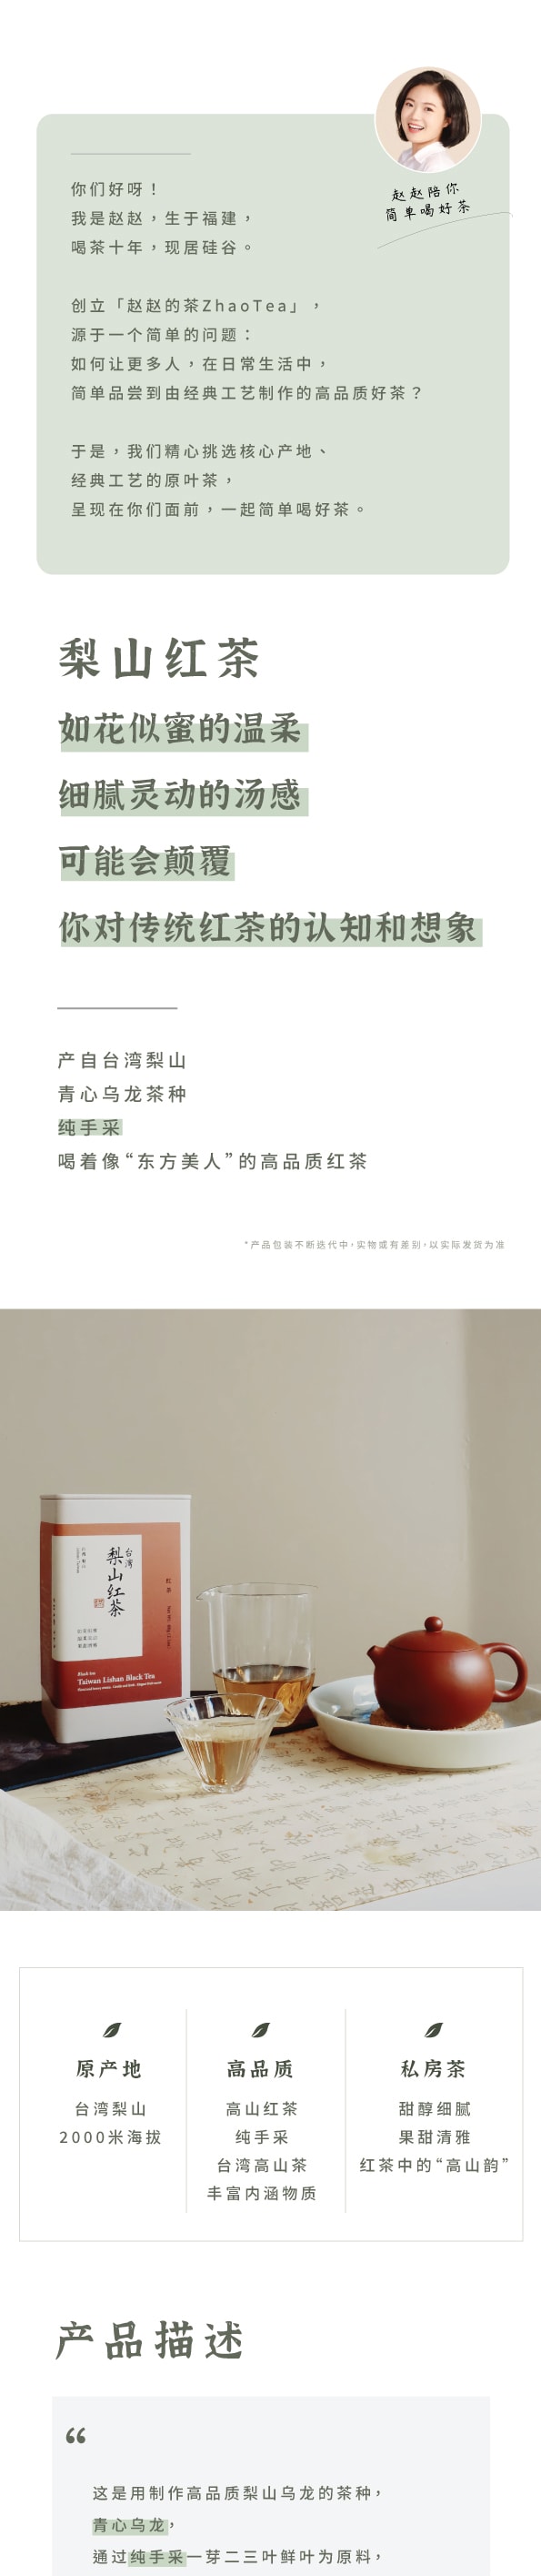 ZhaoTea 梨山紅茶 台灣高等級高山紅茶 花果蜜香 甘甜細膩 茶葉 紅茶60g